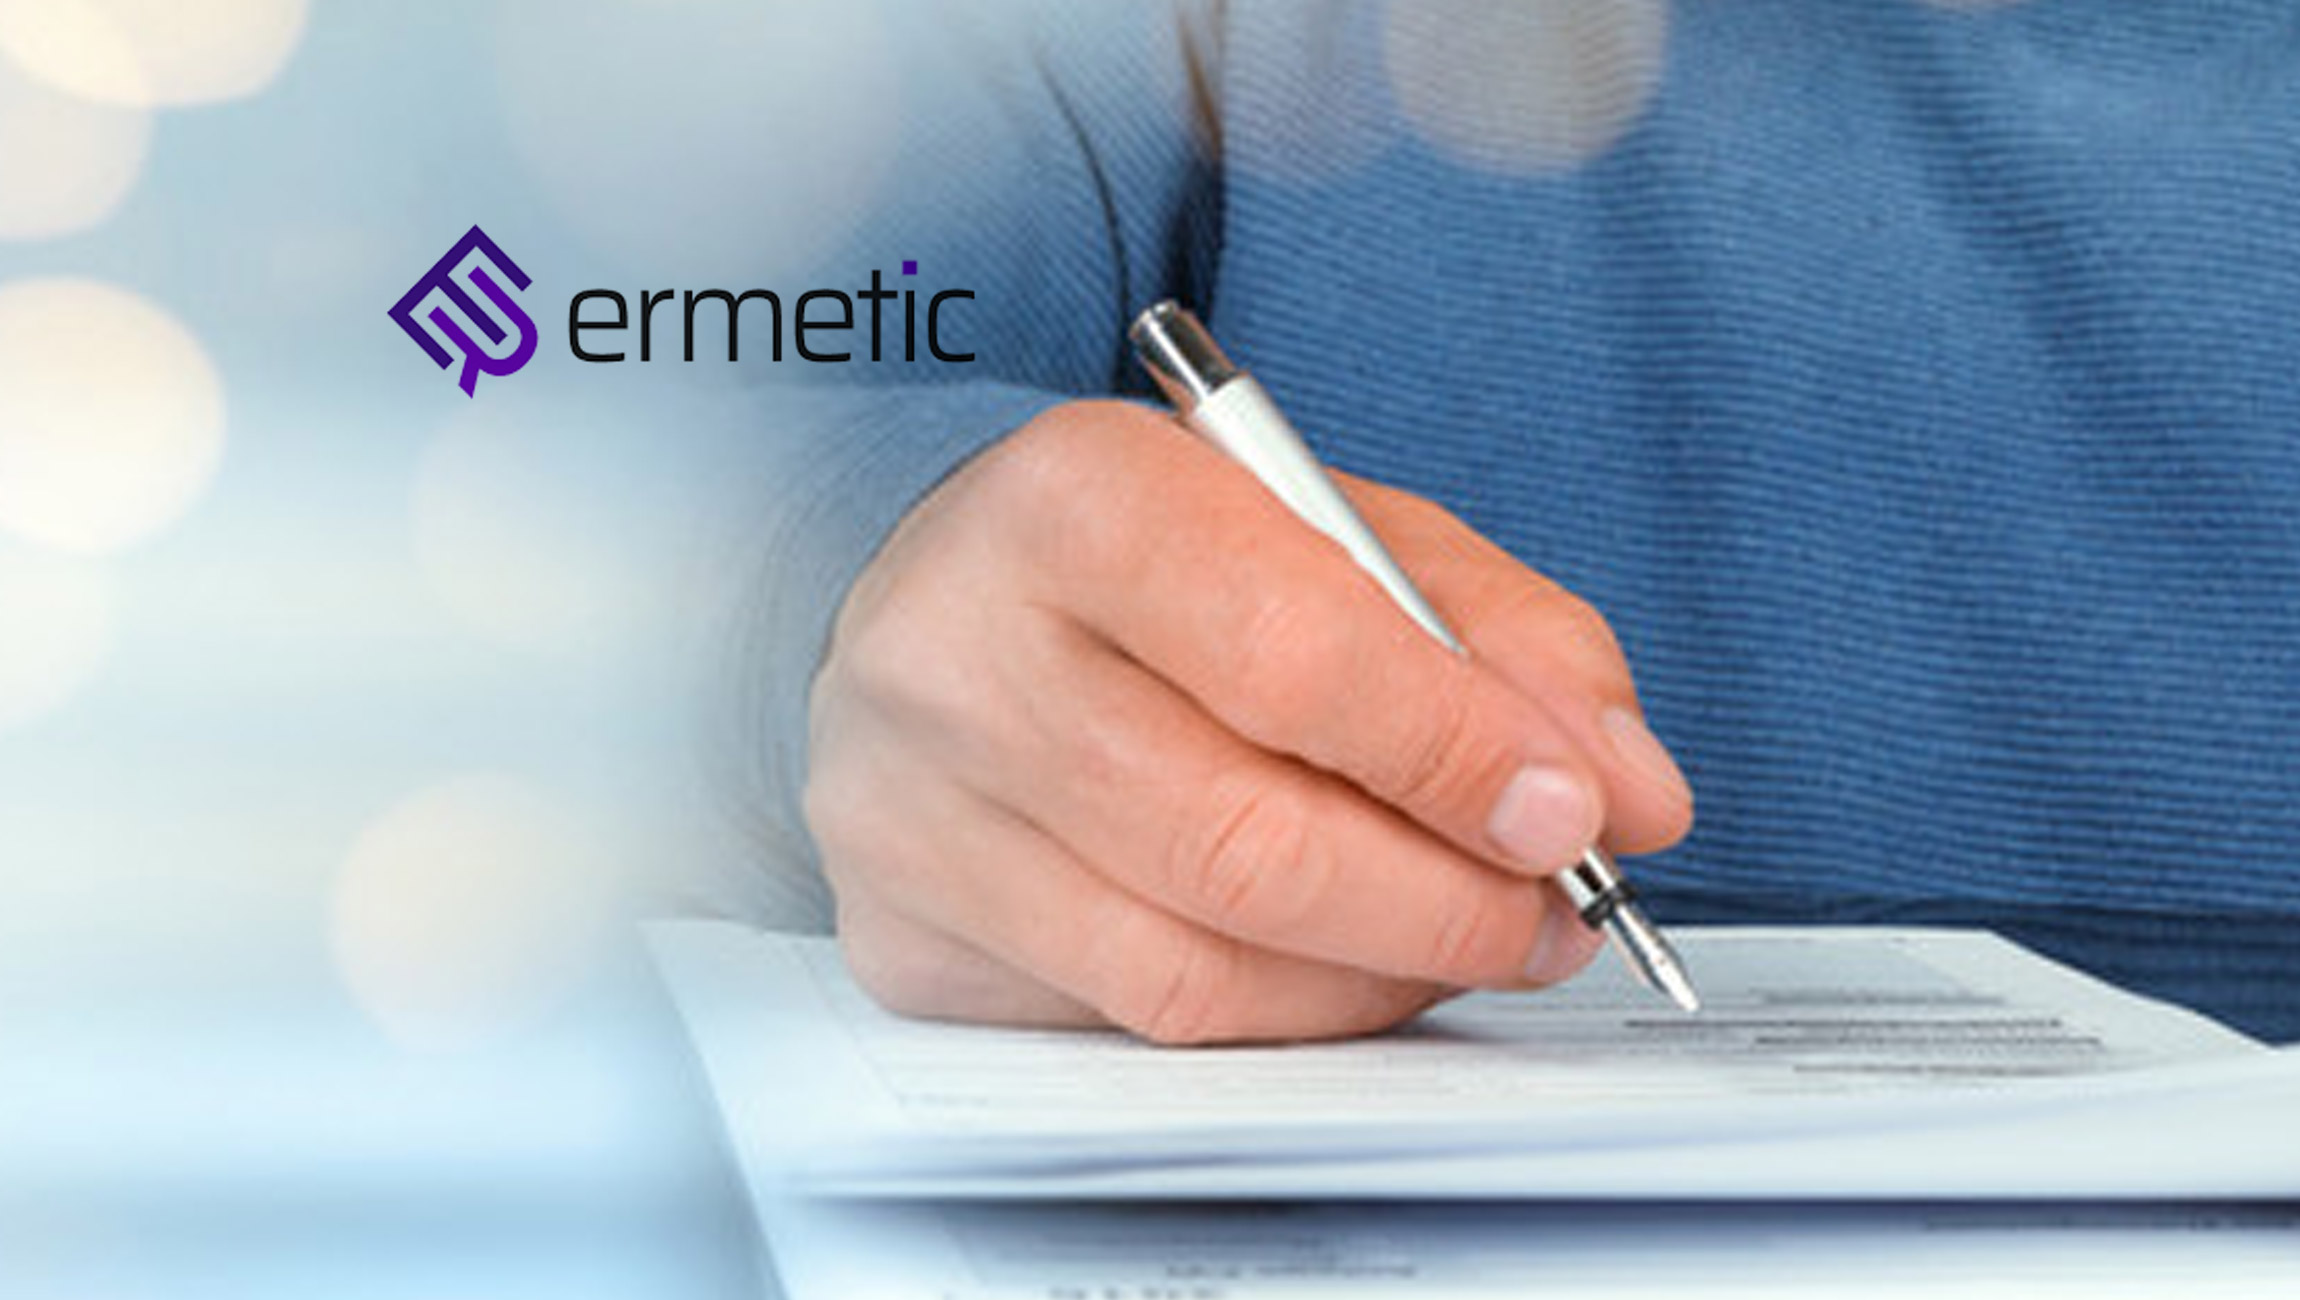 Ermetic Appoints Eduard Meelhuysen VP Sales for EMEA